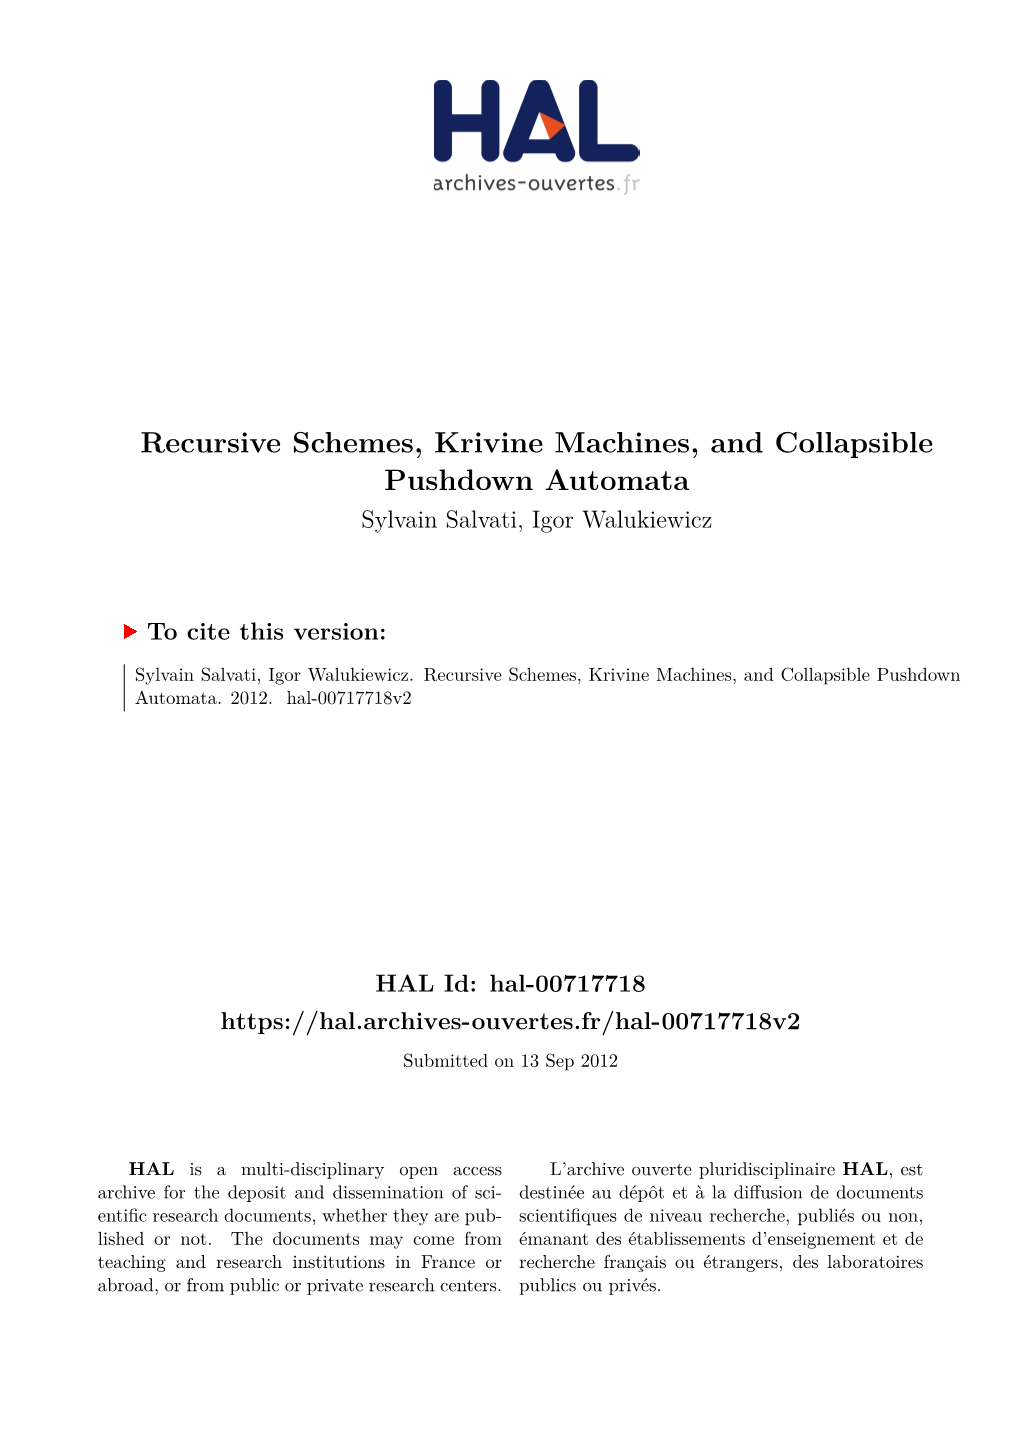 Recursive Schemes, Krivine Machines, and Collapsible Pushdown Automata Sylvain Salvati, Igor Walukiewicz